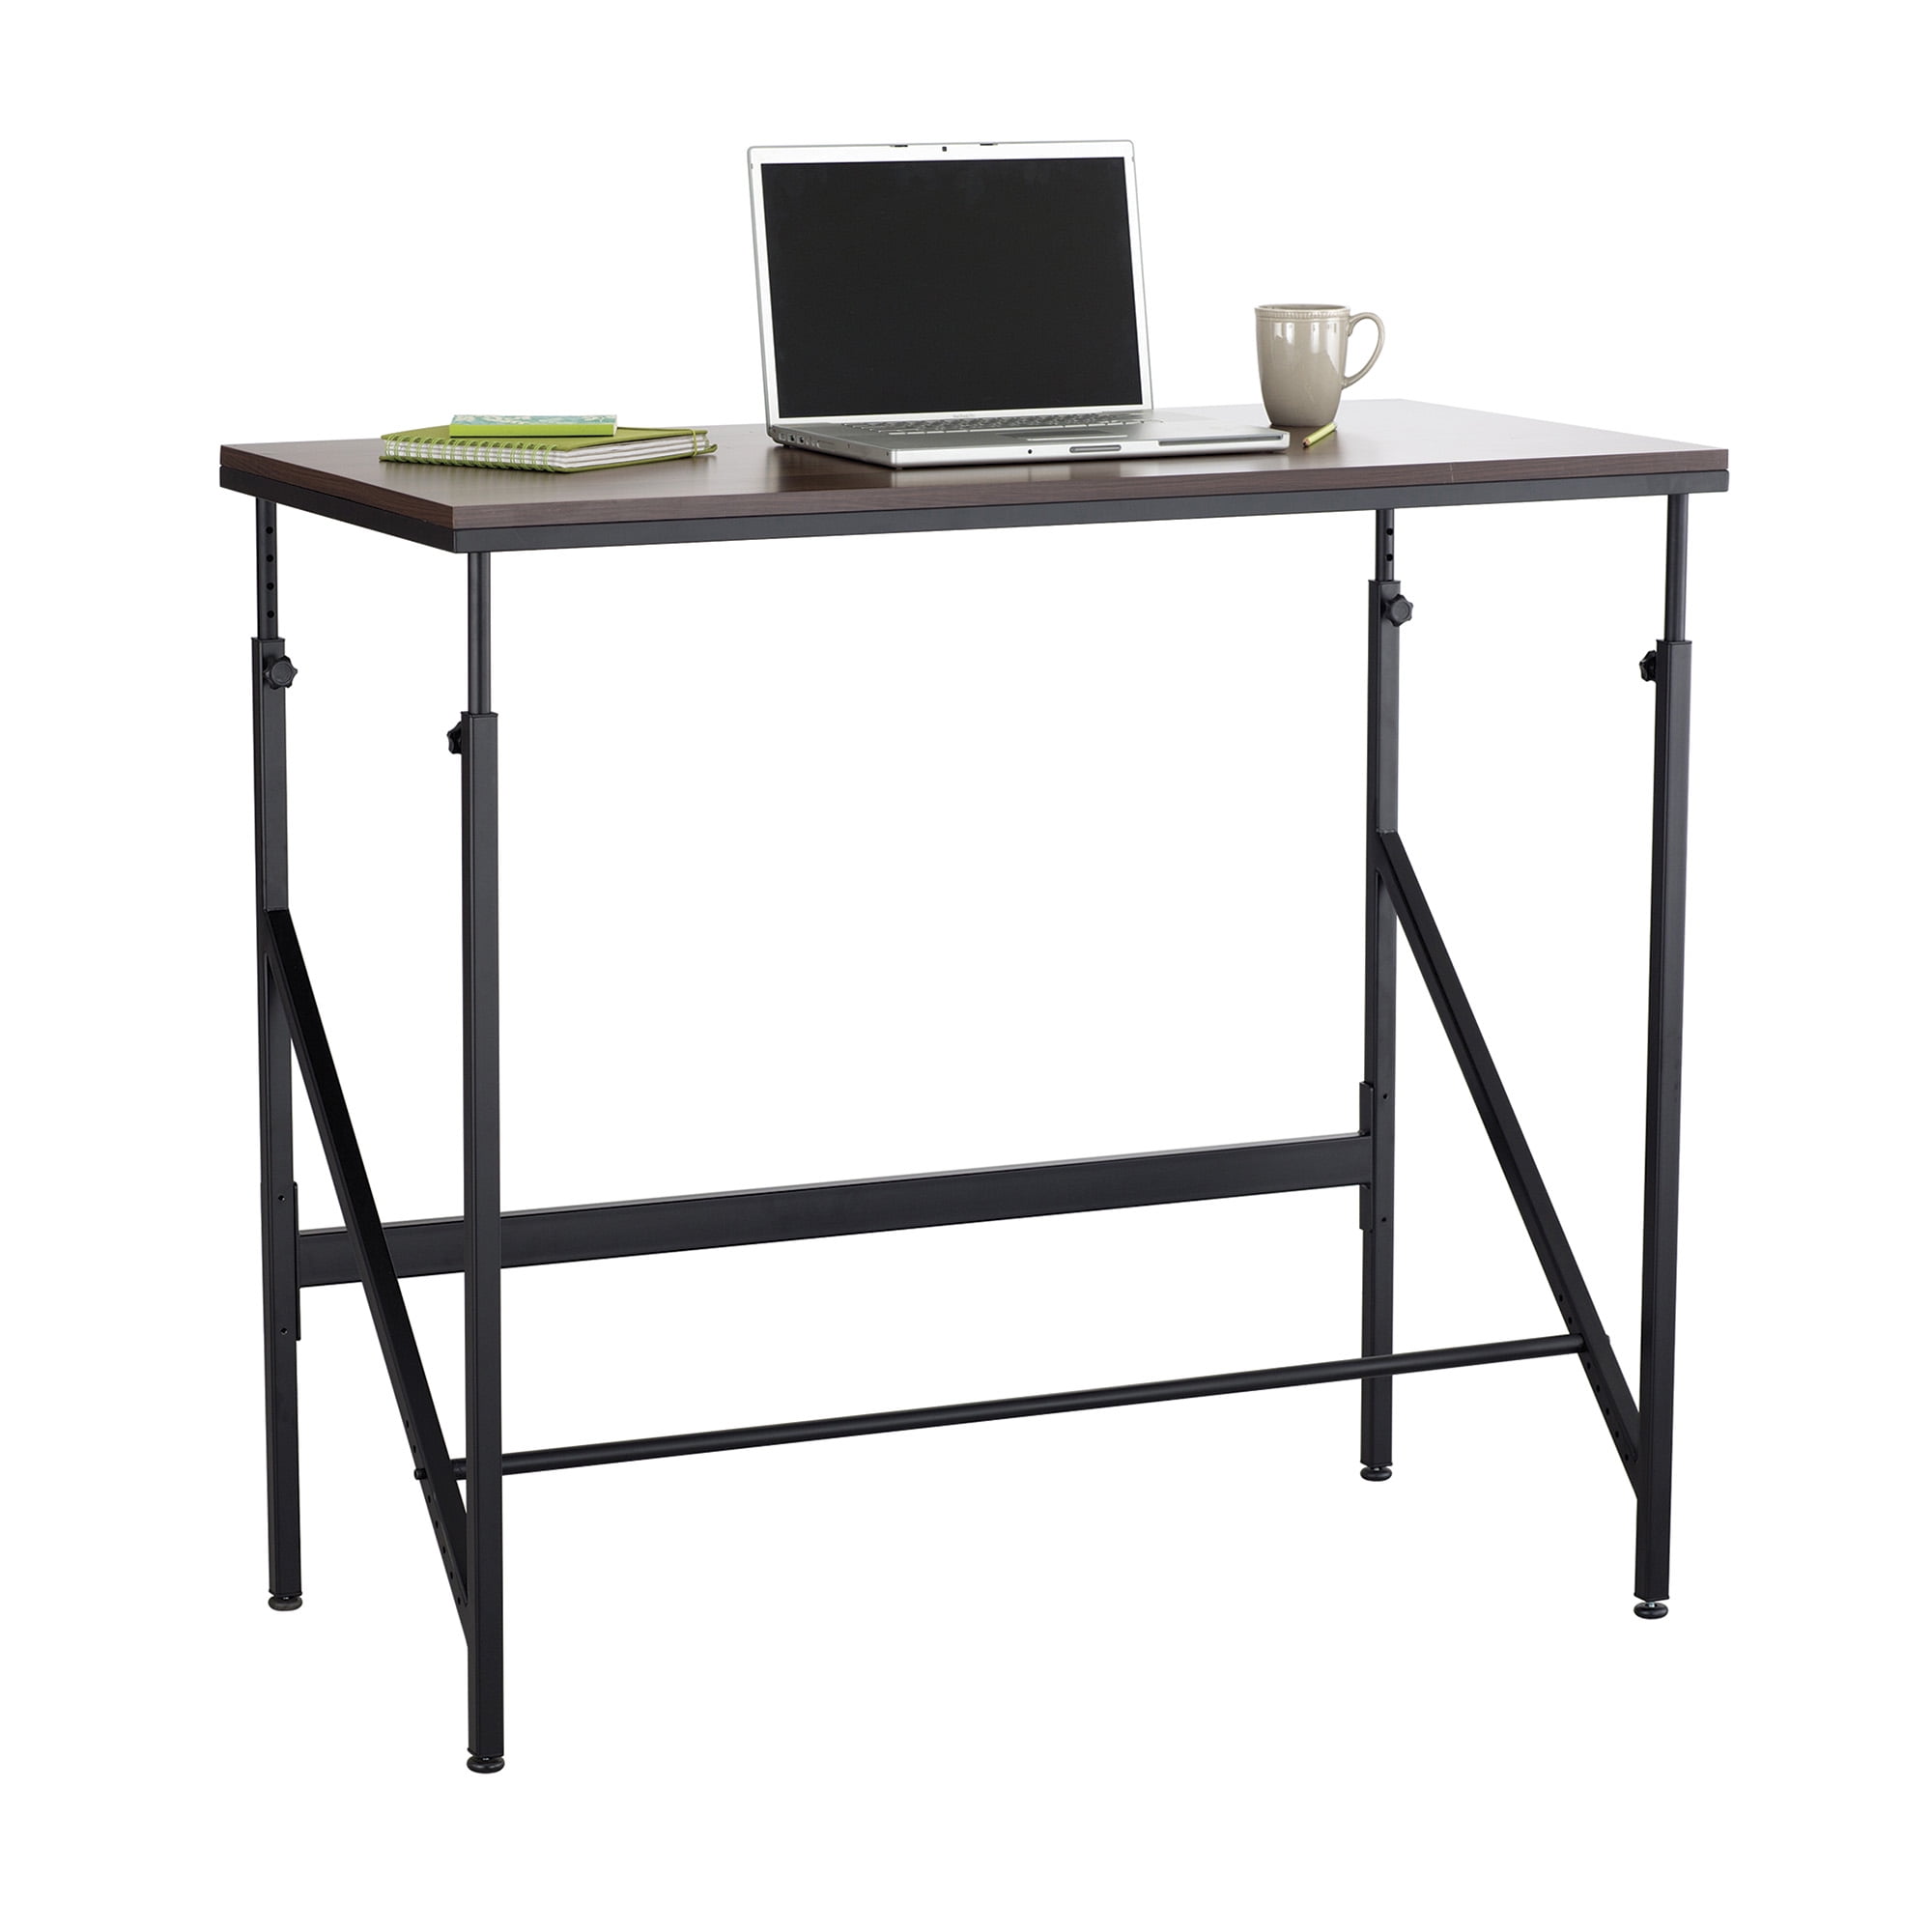  Best Adjustable Standing Desk Uk for Small Room